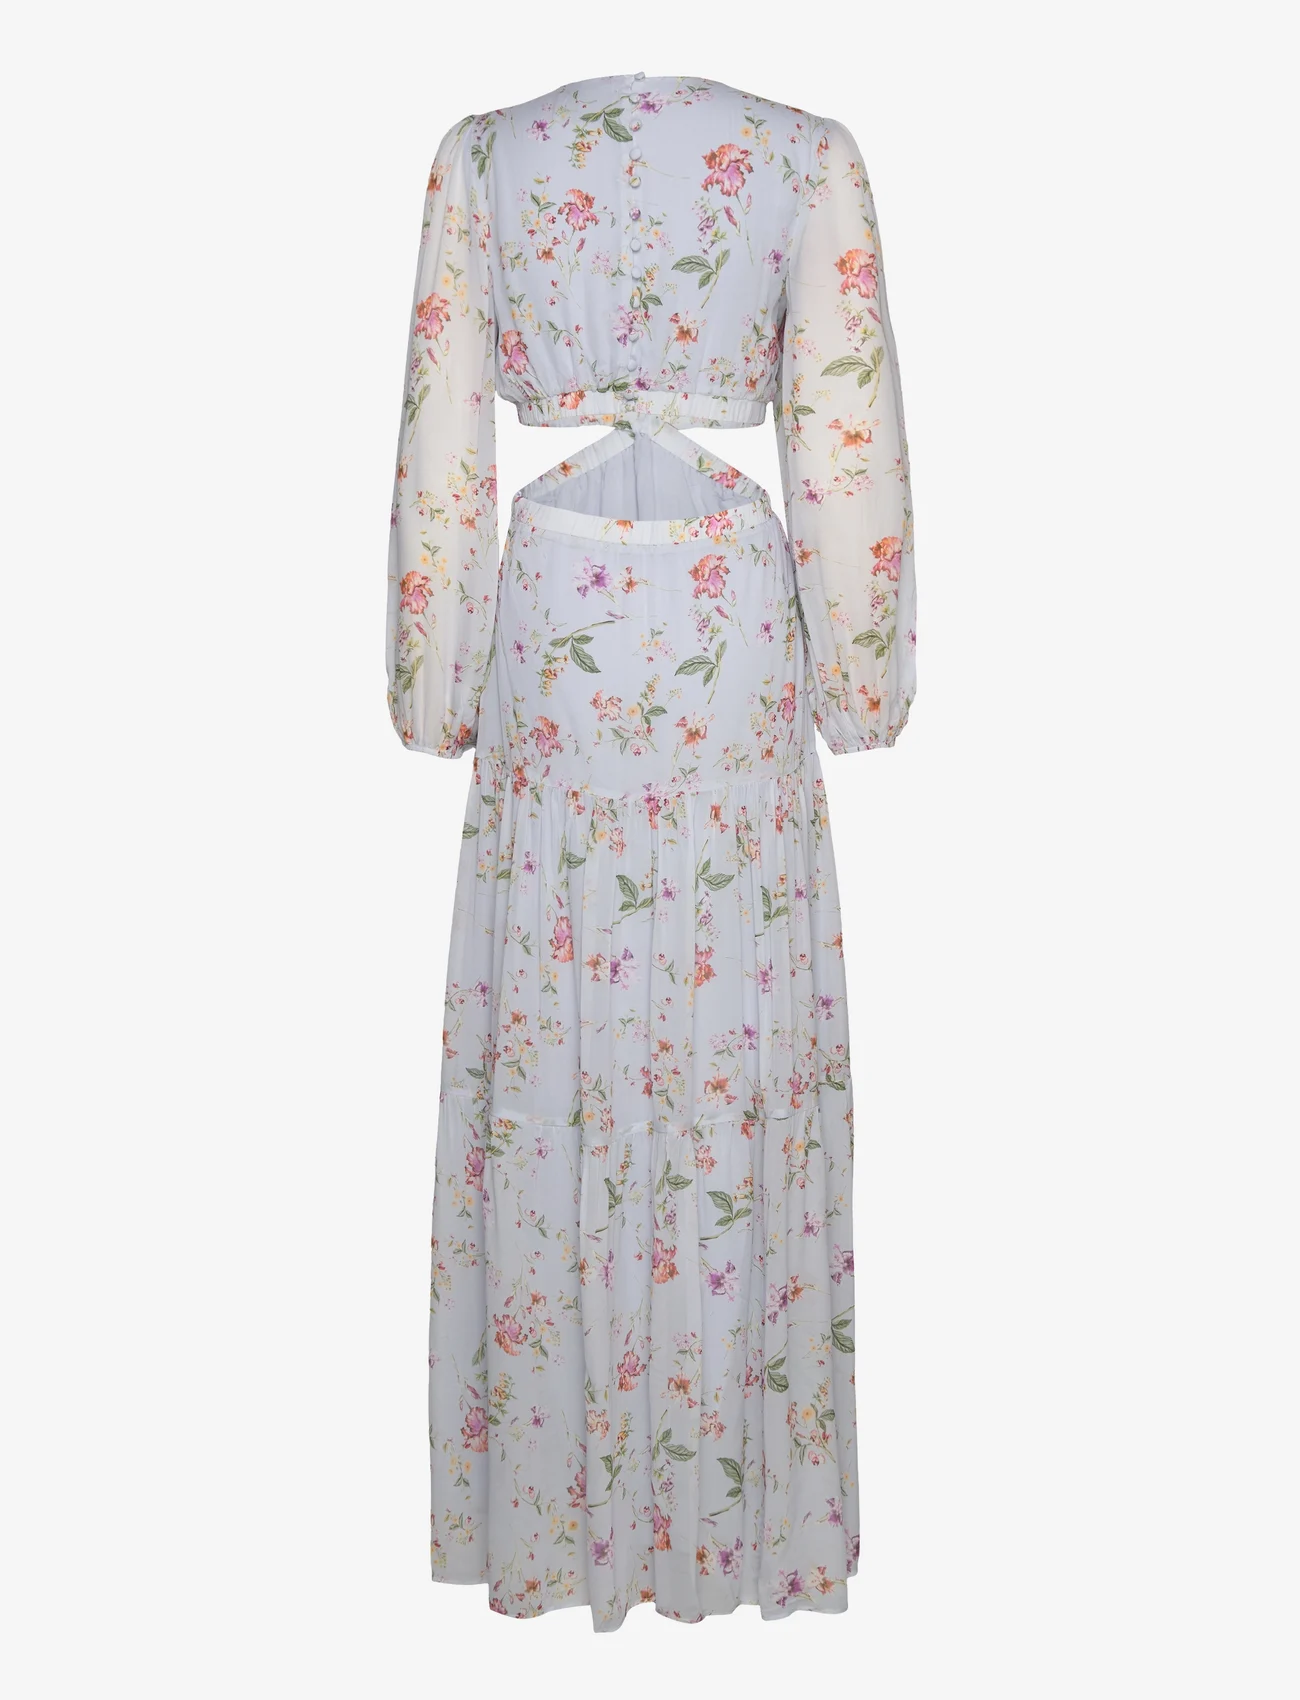 Malina - Hollie Dress - ballīšu apģērbs par outlet cenām - soft floral sky blue - 1